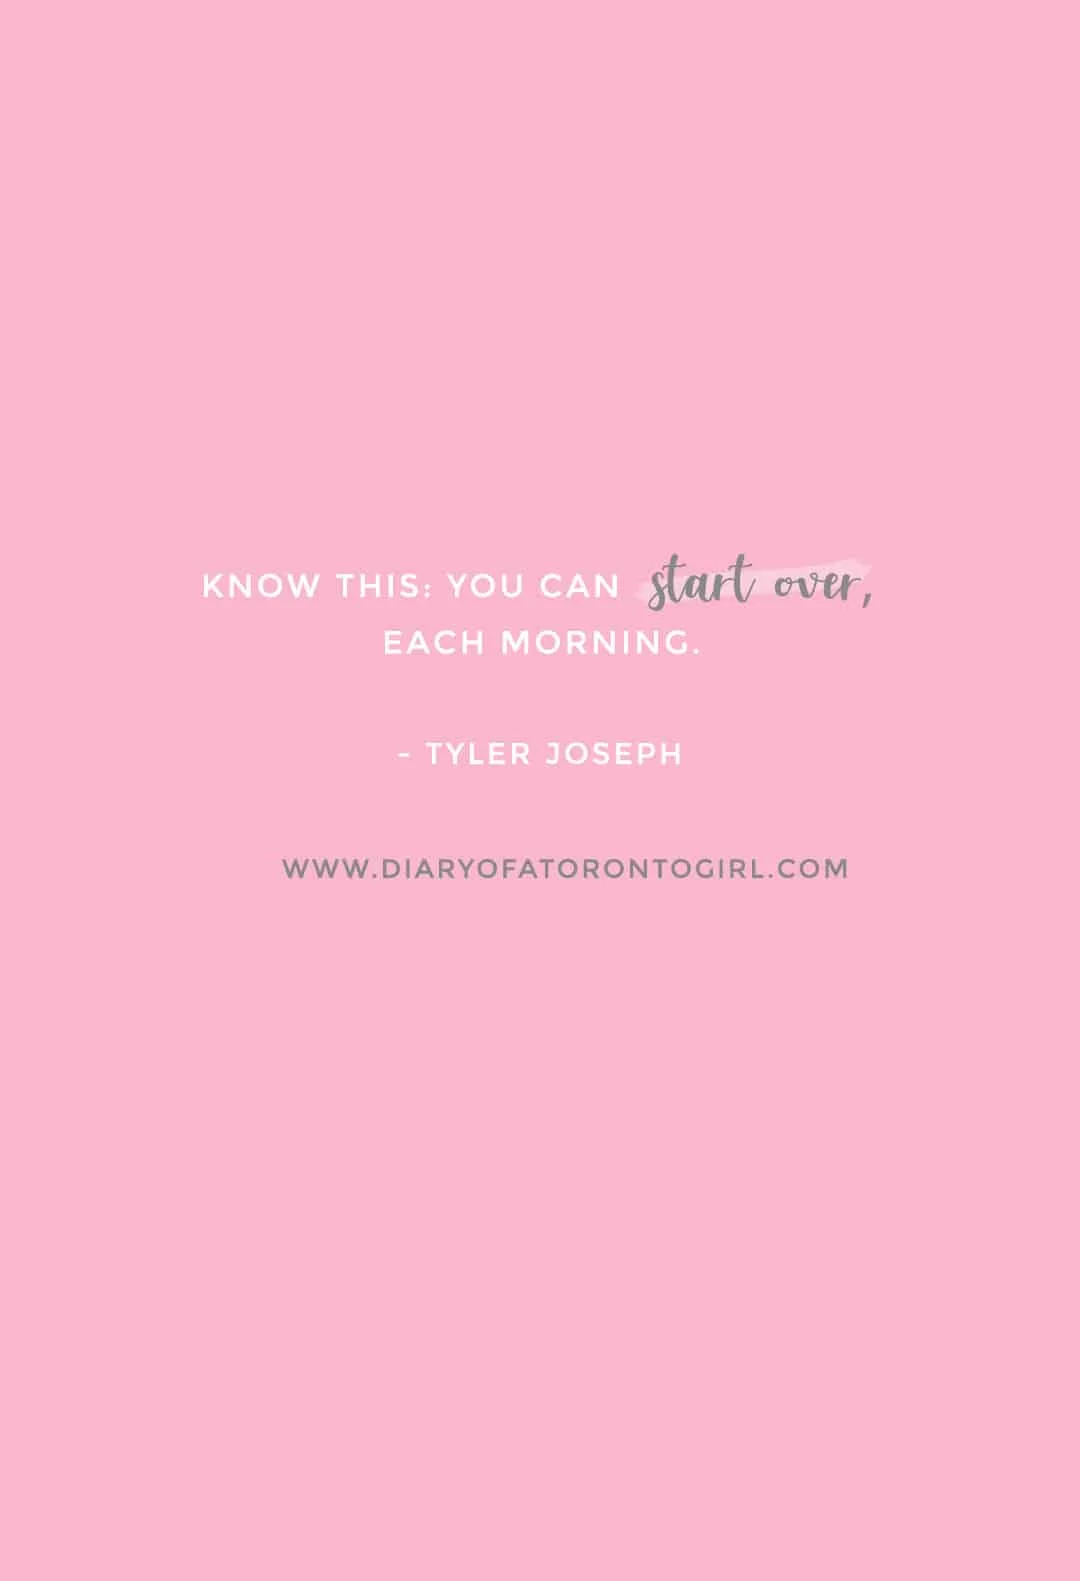 Tyler Joseph inspirational quote